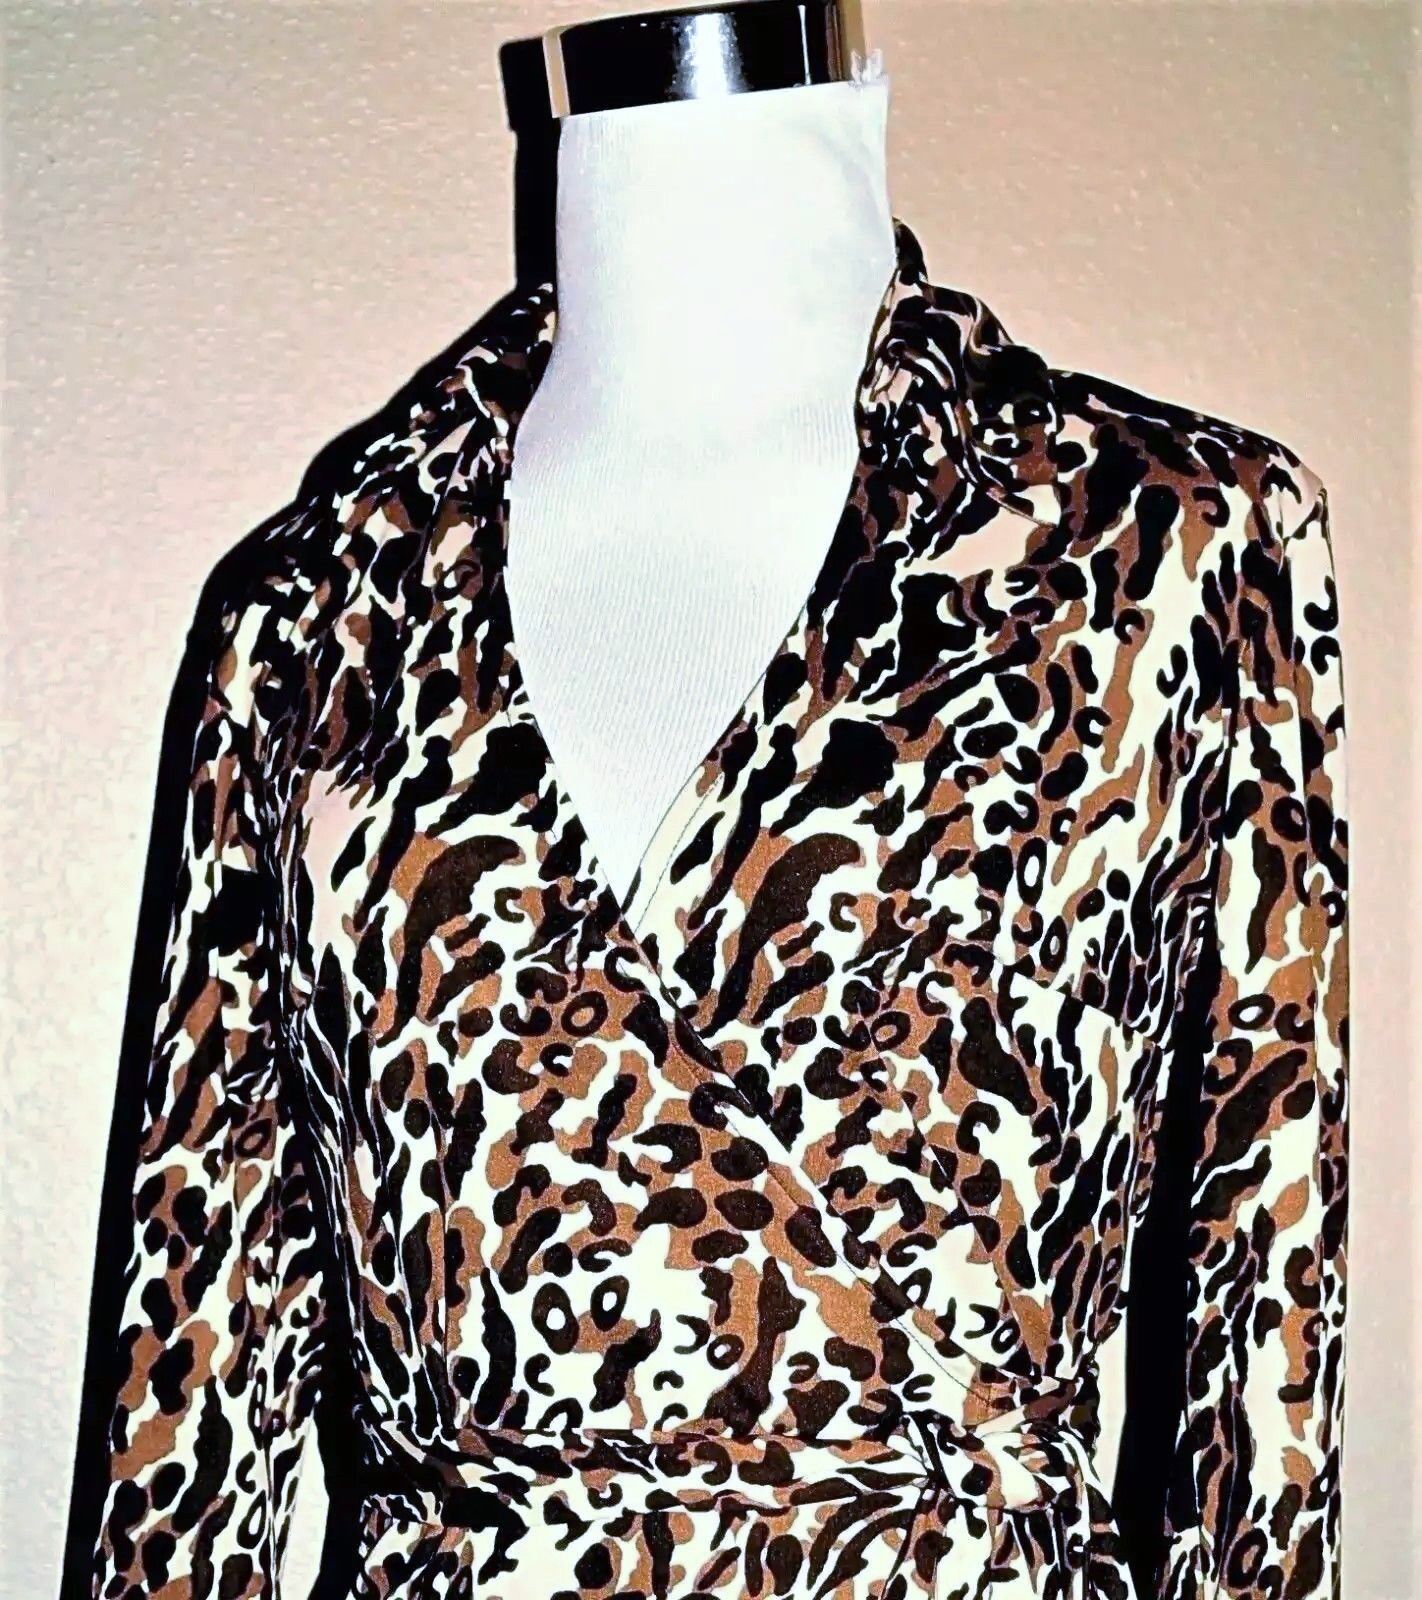 Leopard Print Wrap Dress - image 2